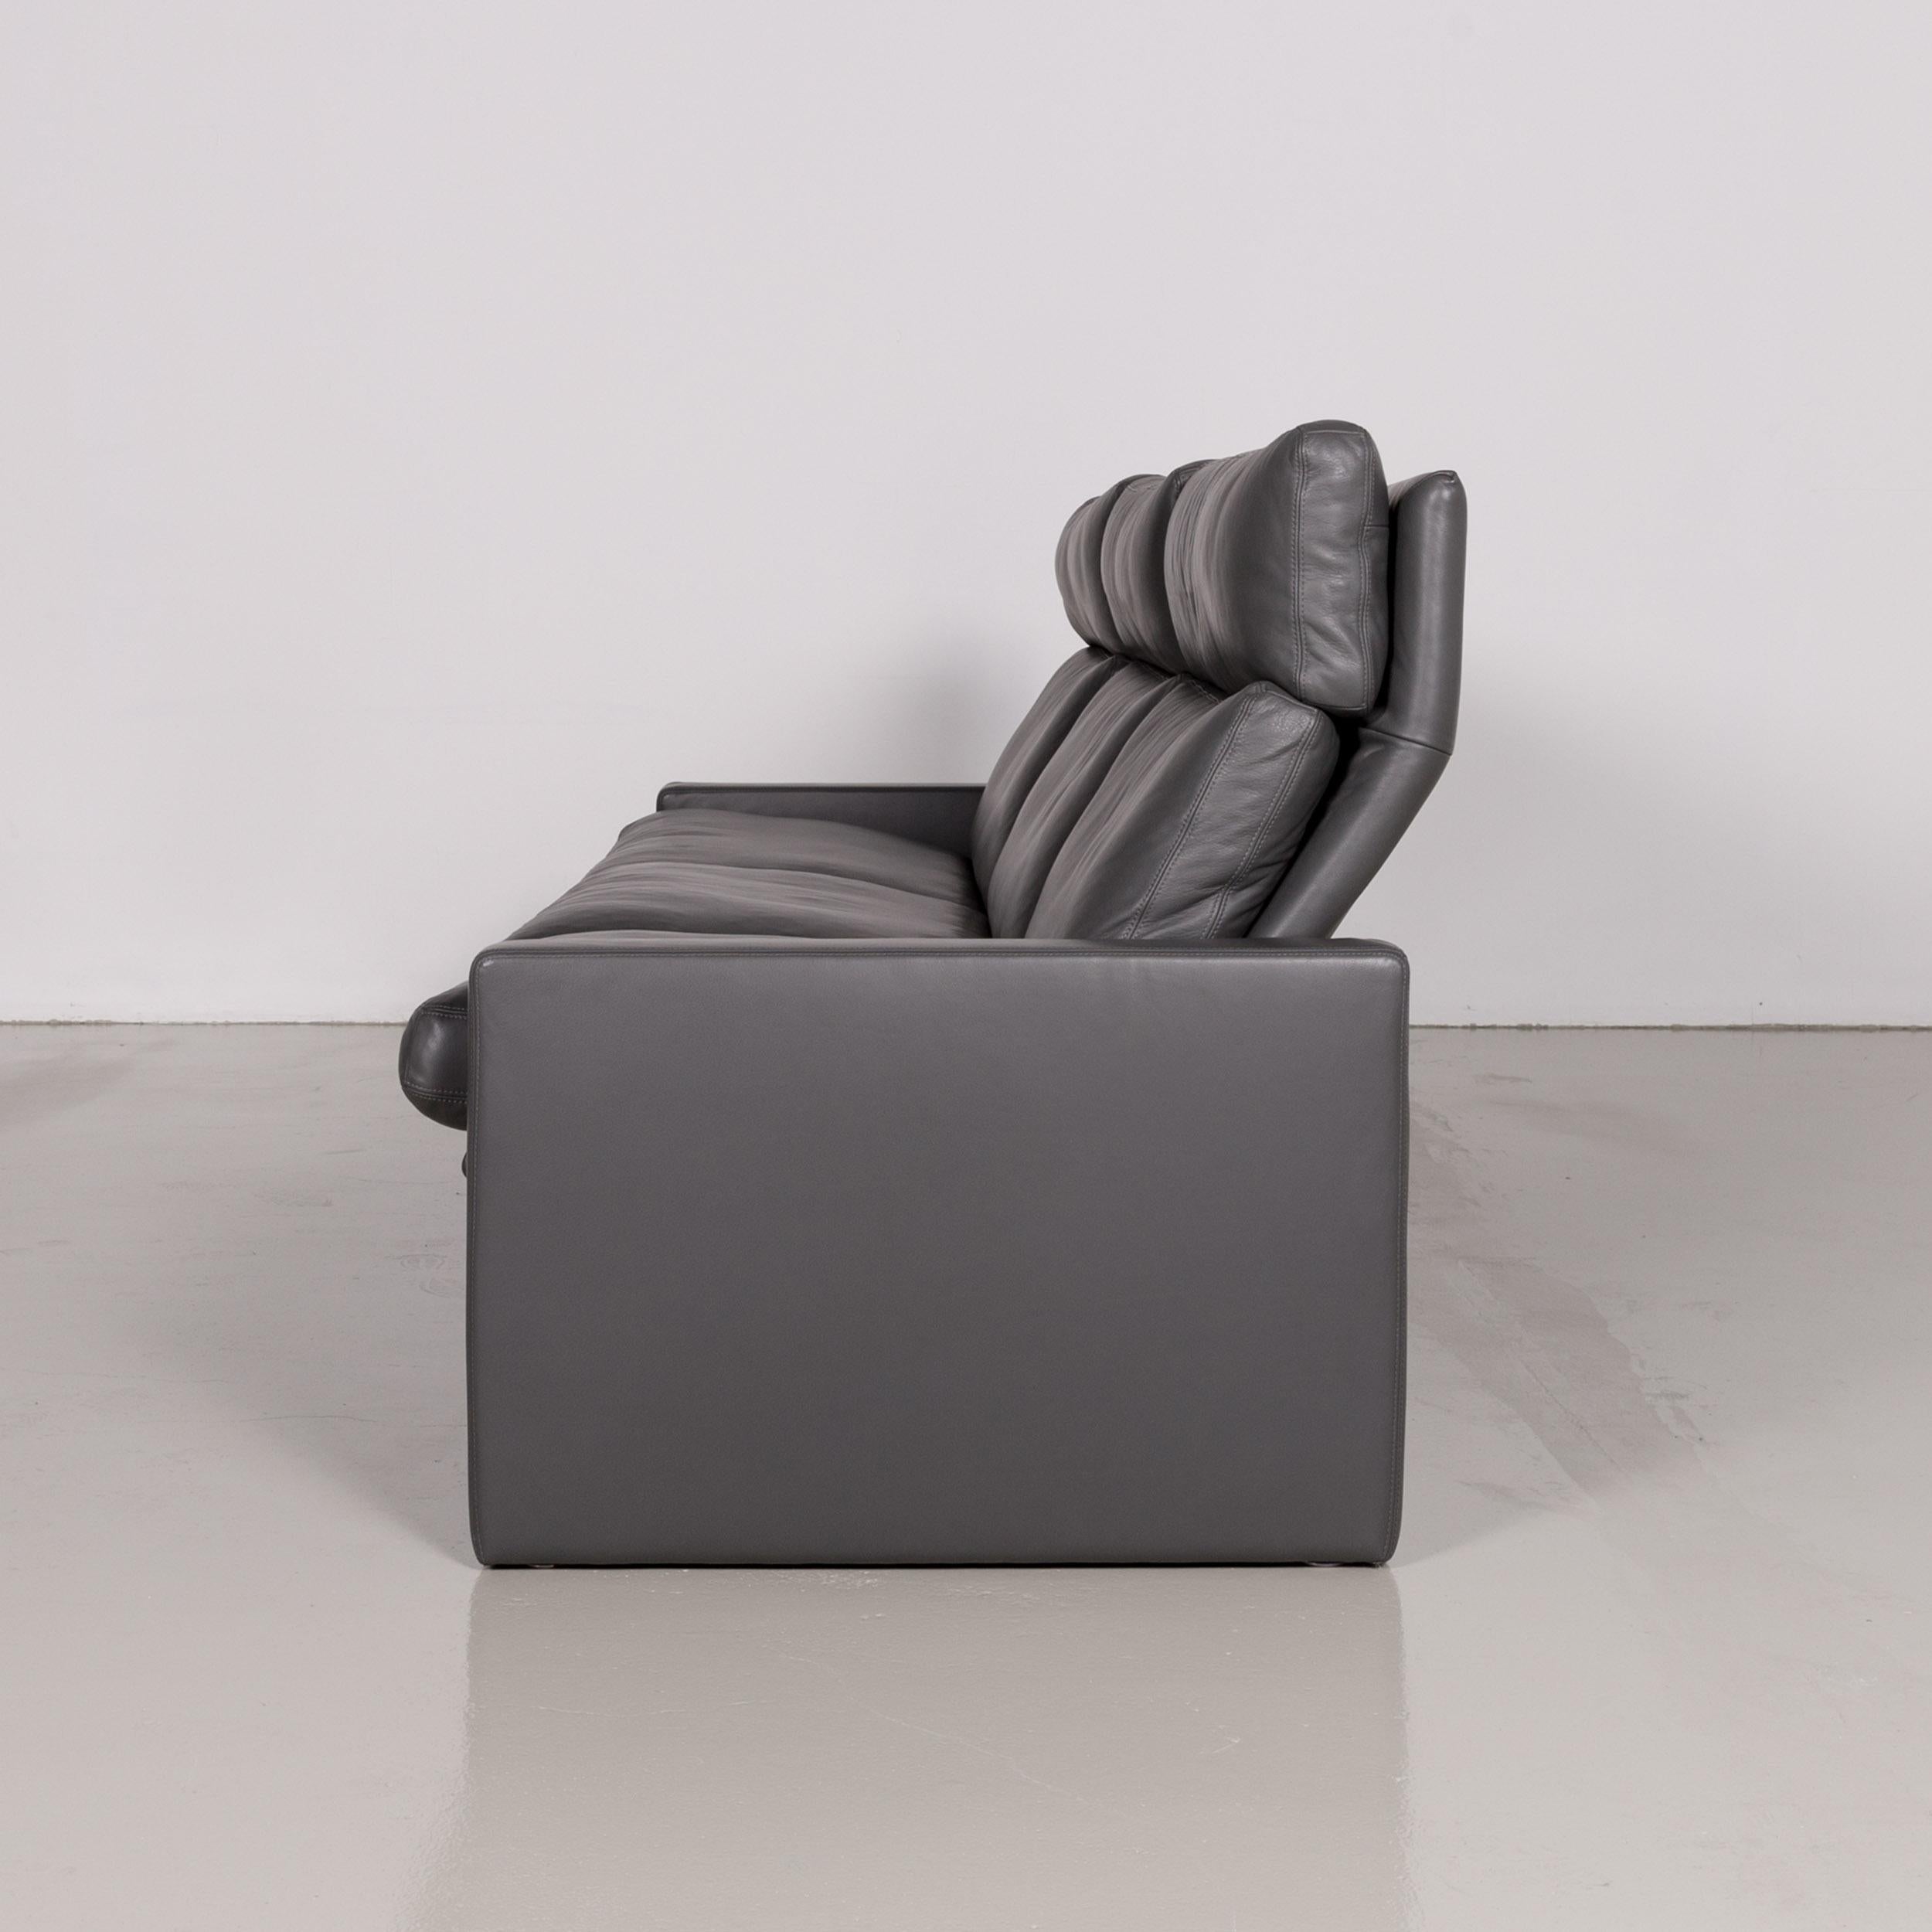 Erpo Manhattan Designer Leather Sofa in Anthracite Grey Three-Seat Couch 4